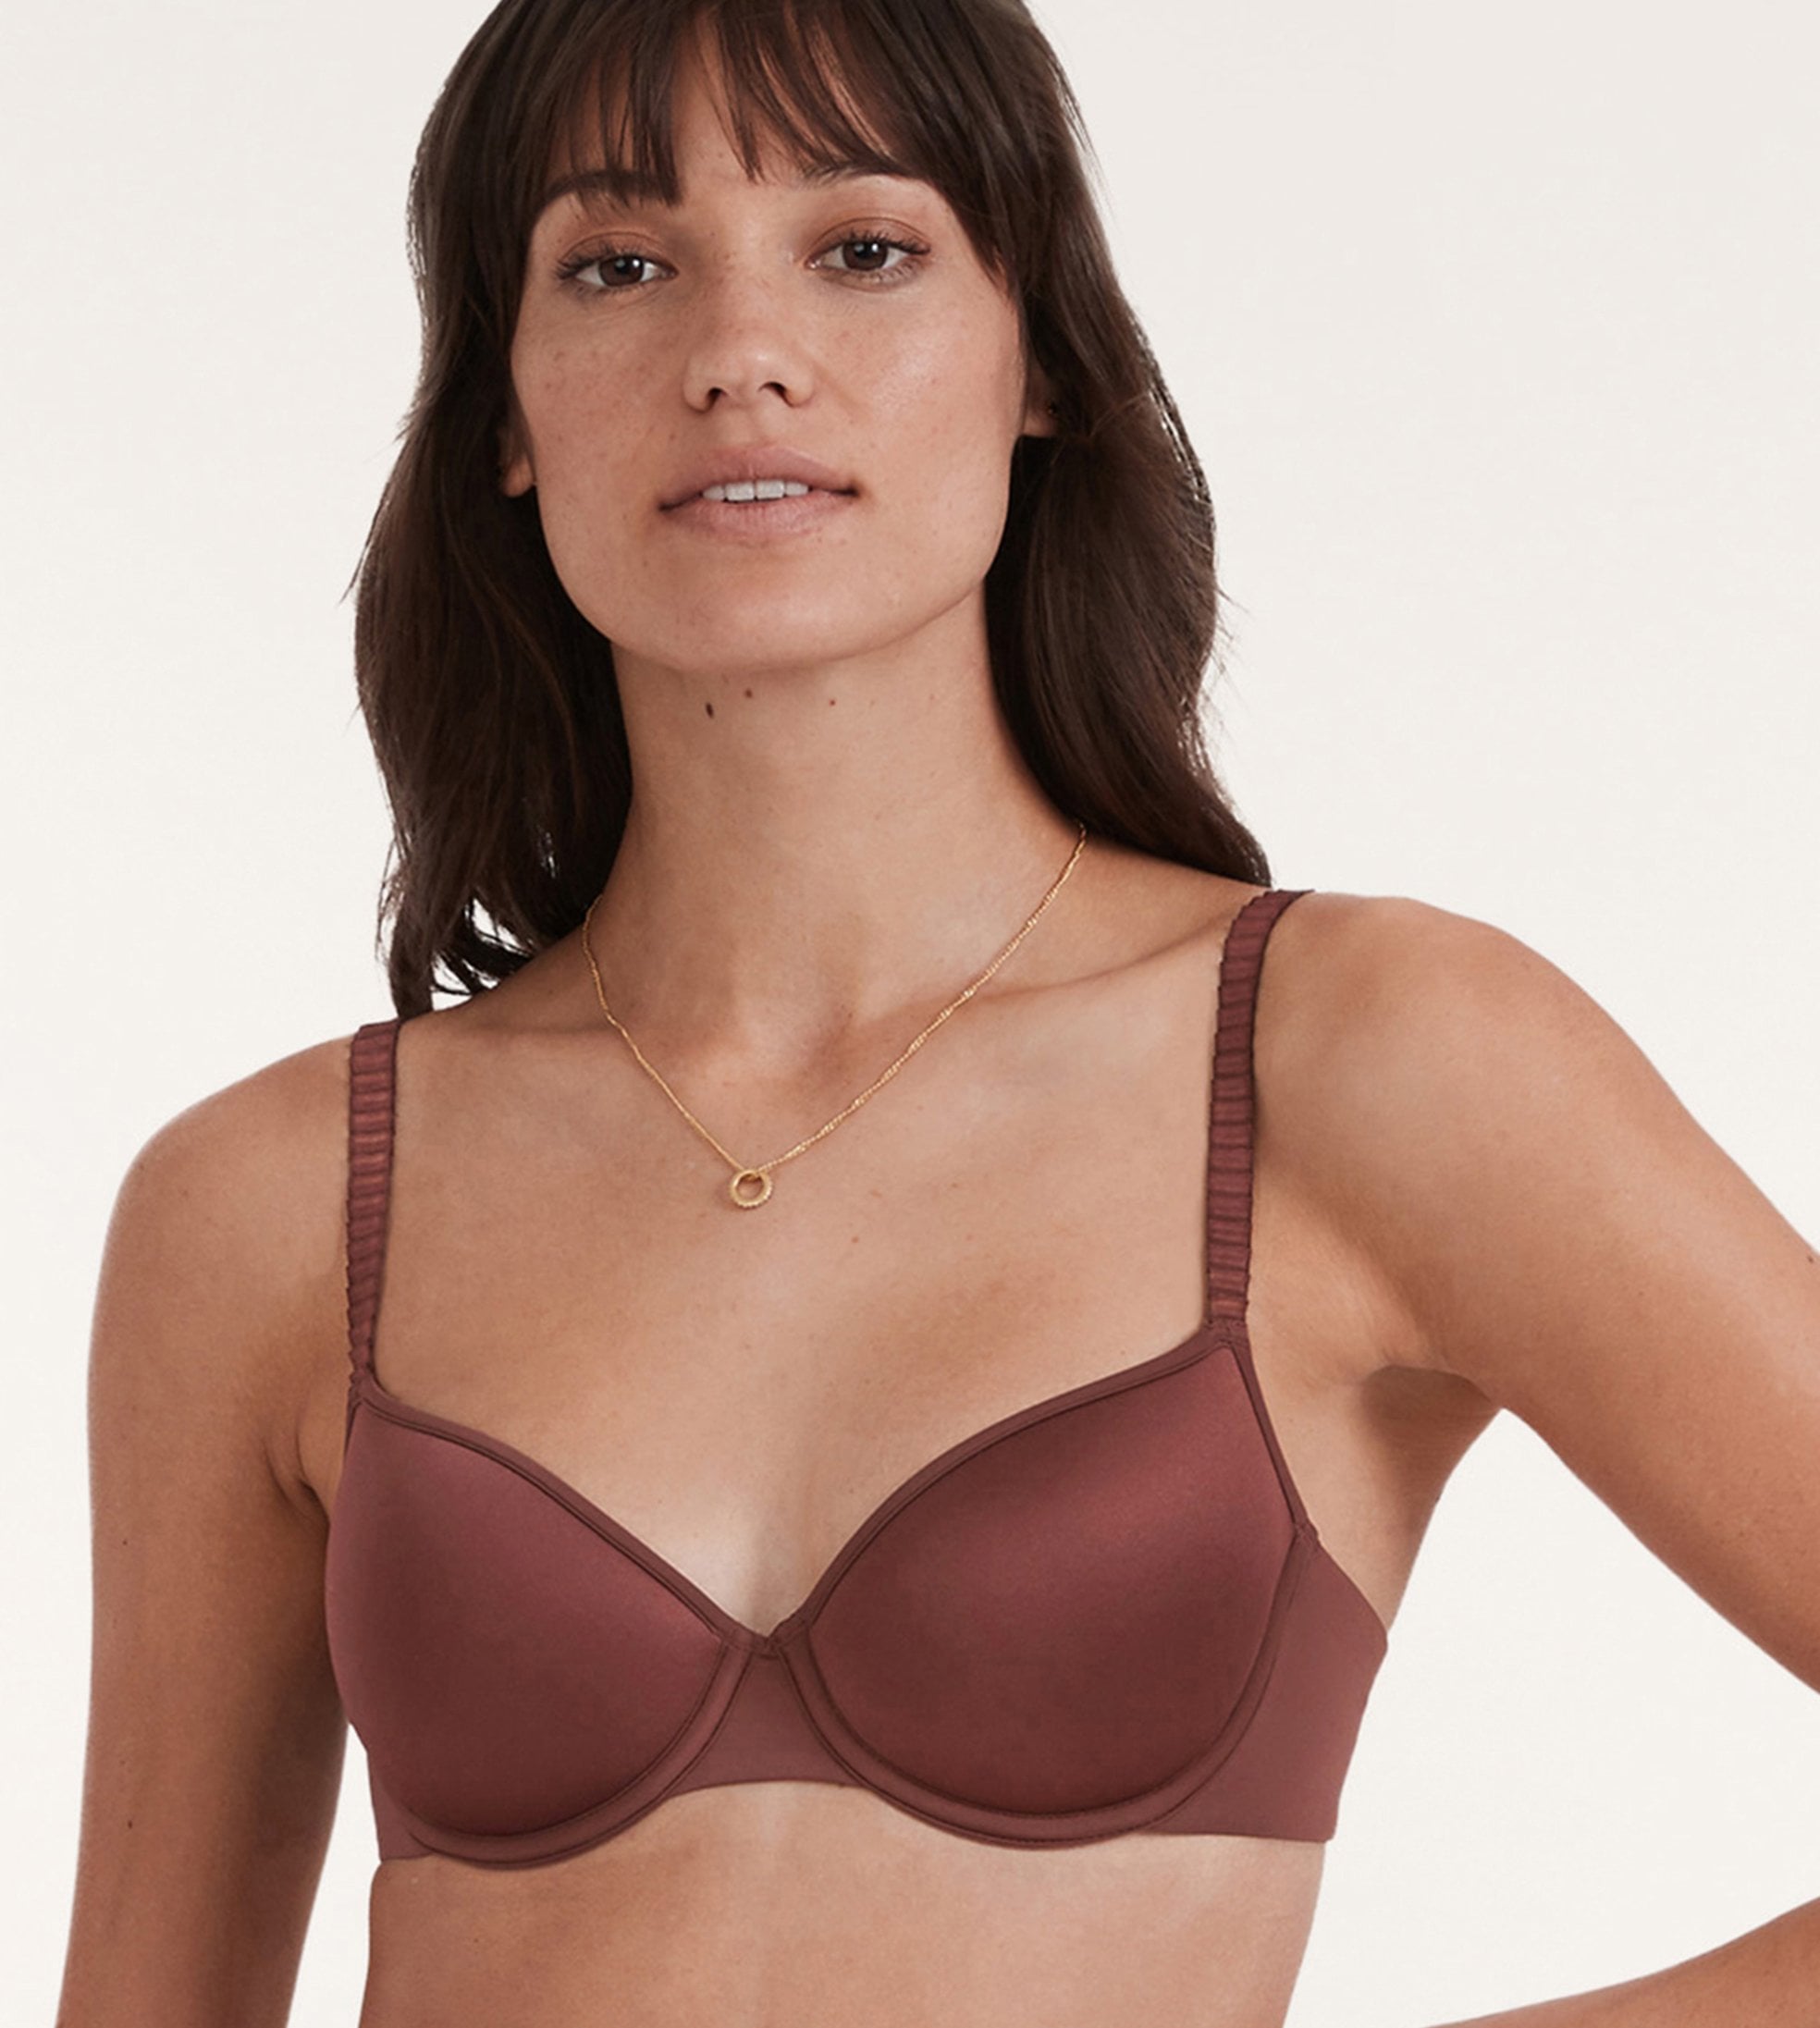 flat chested girls - Buscar con Google  Small bust bra, Online bra  shopping, Bra